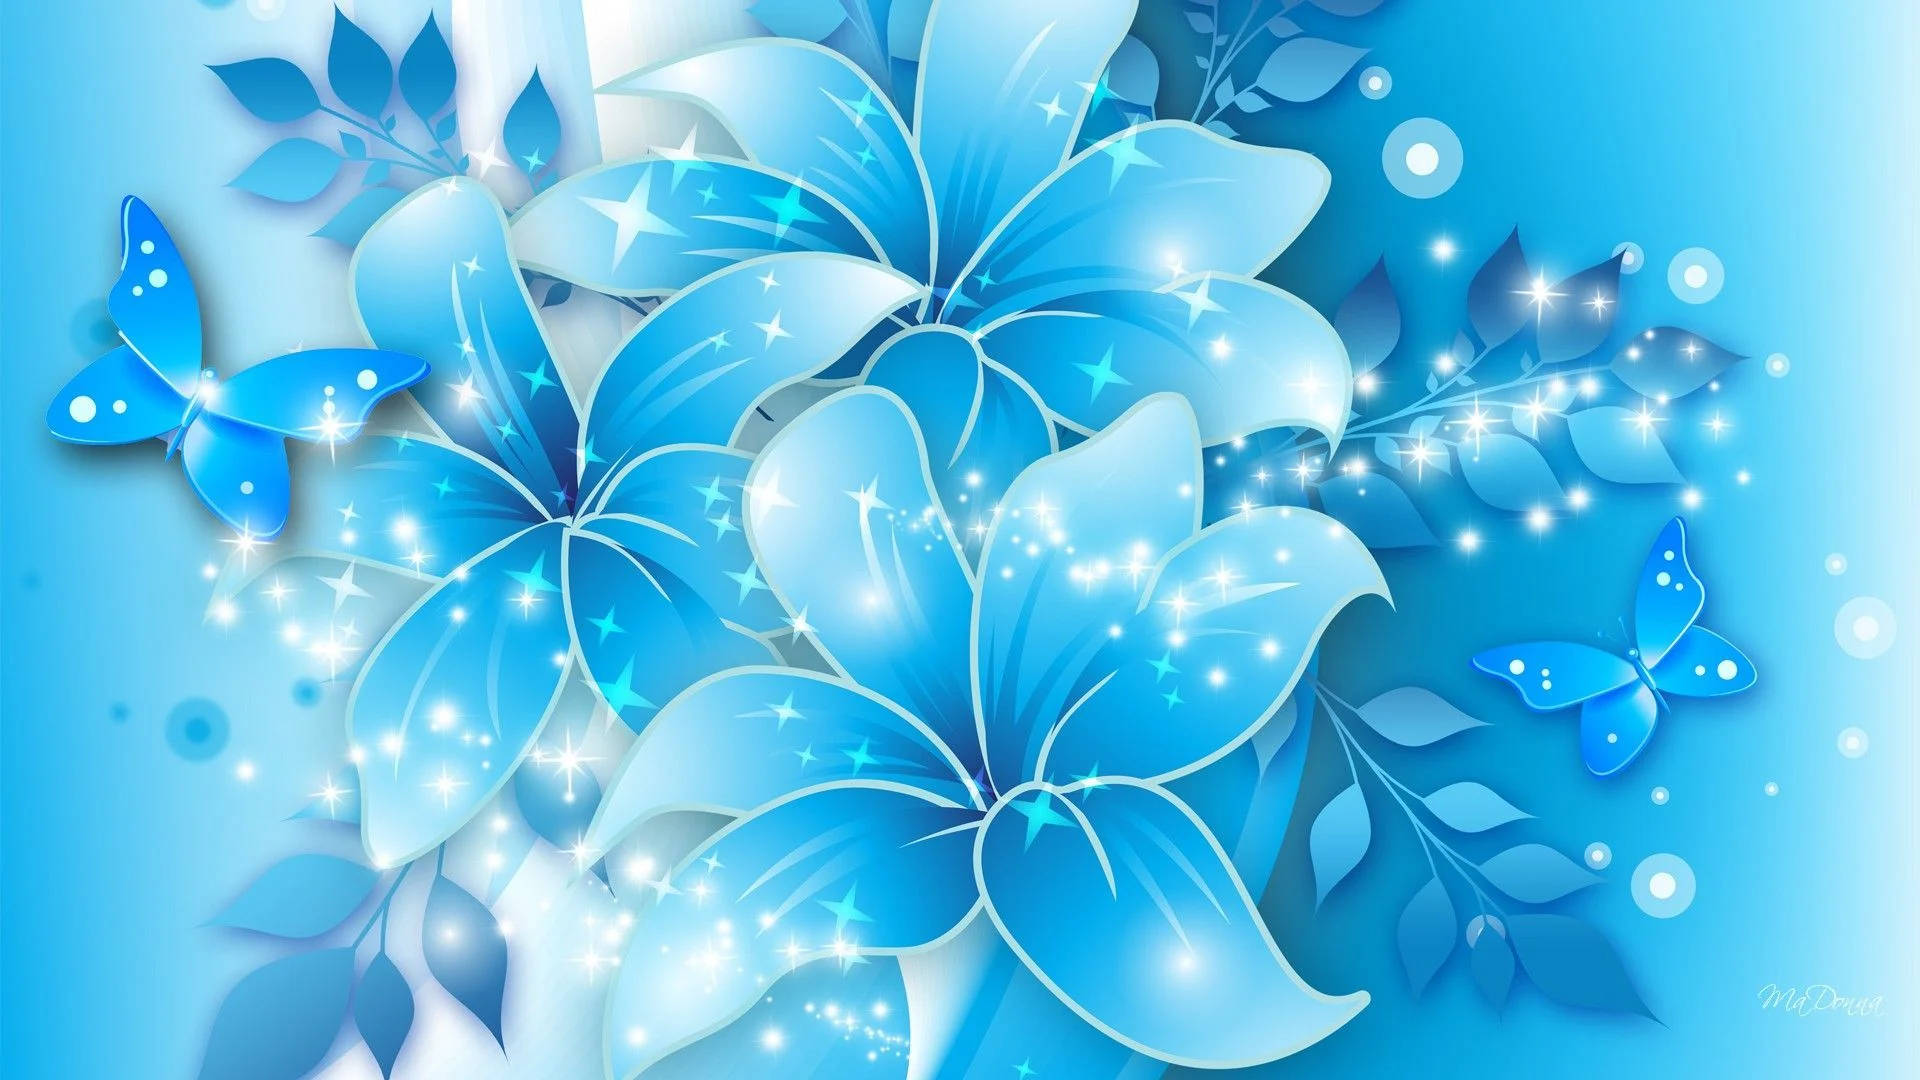 Ethereal Beauty of Blue Hues Wallpaper